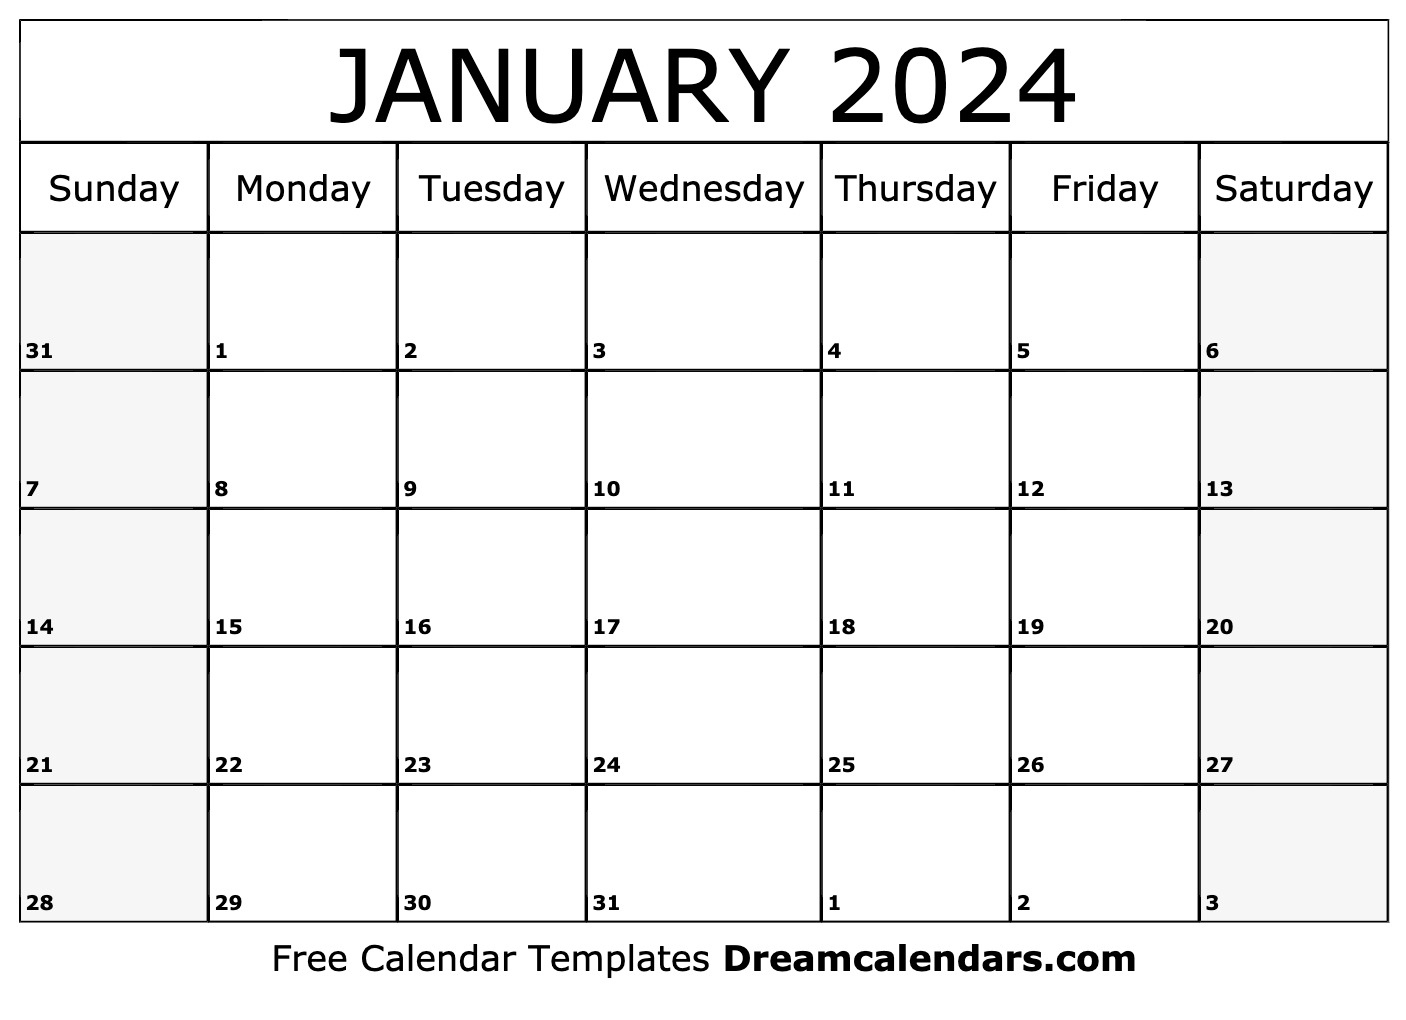 January 2024 Calendar | Free Blank Printable With Holidays | Printable Calendar 2024 January Wiki